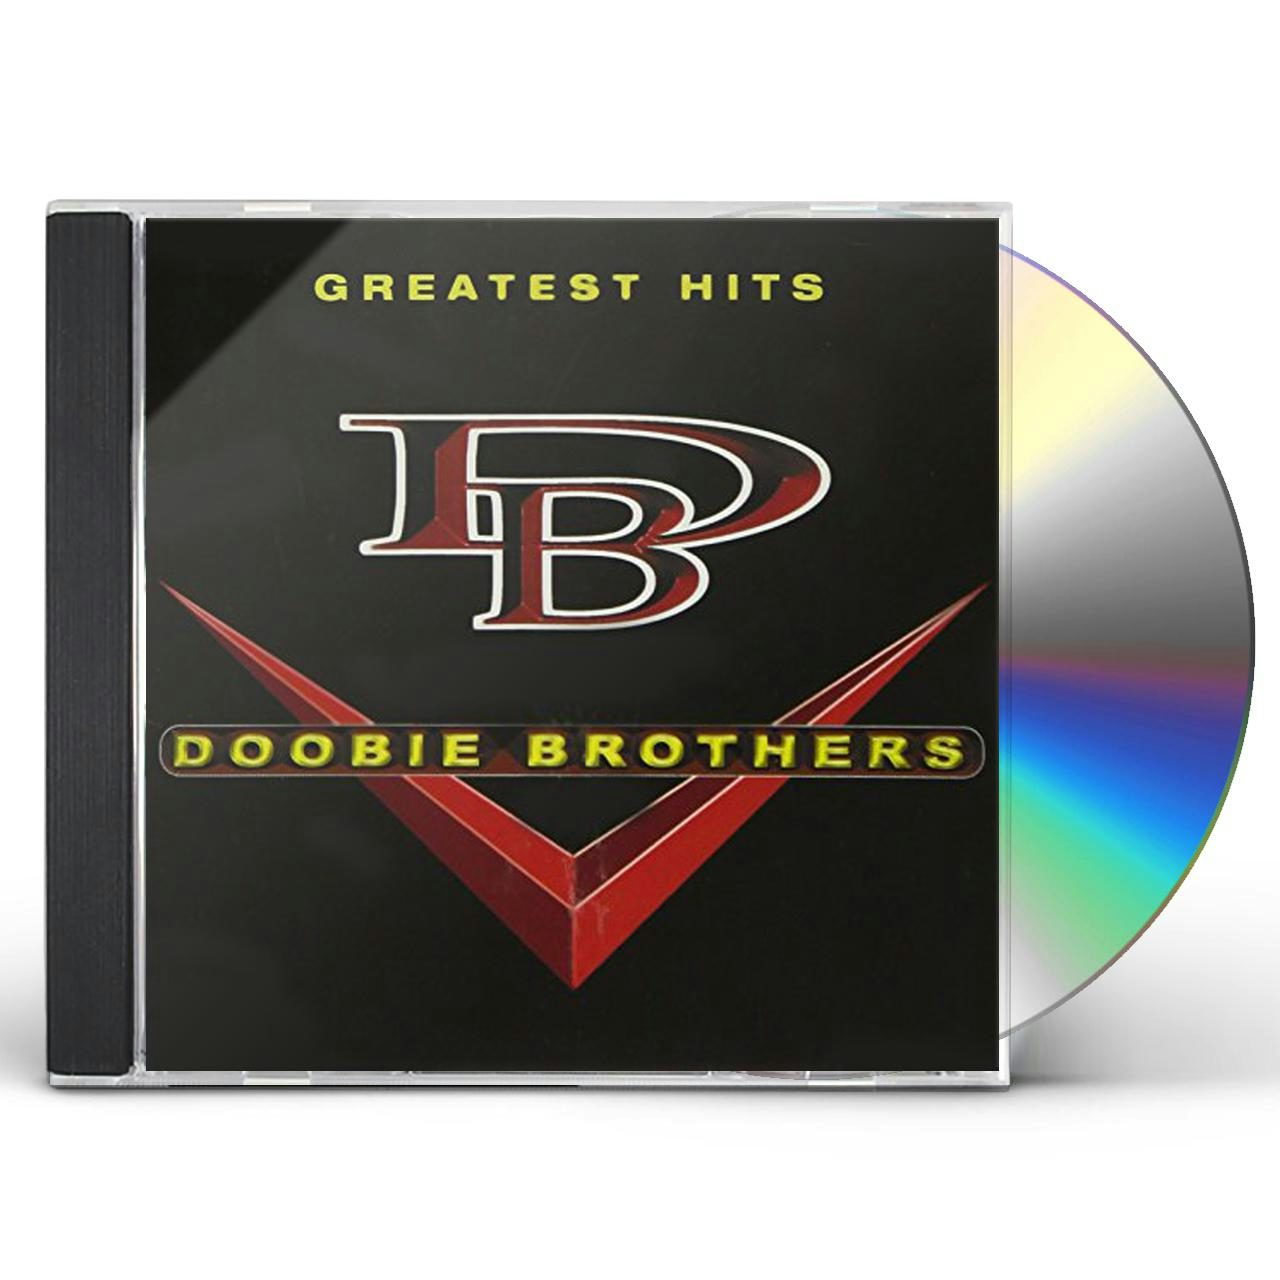 Doobie Brothers Greatest Hits Cd